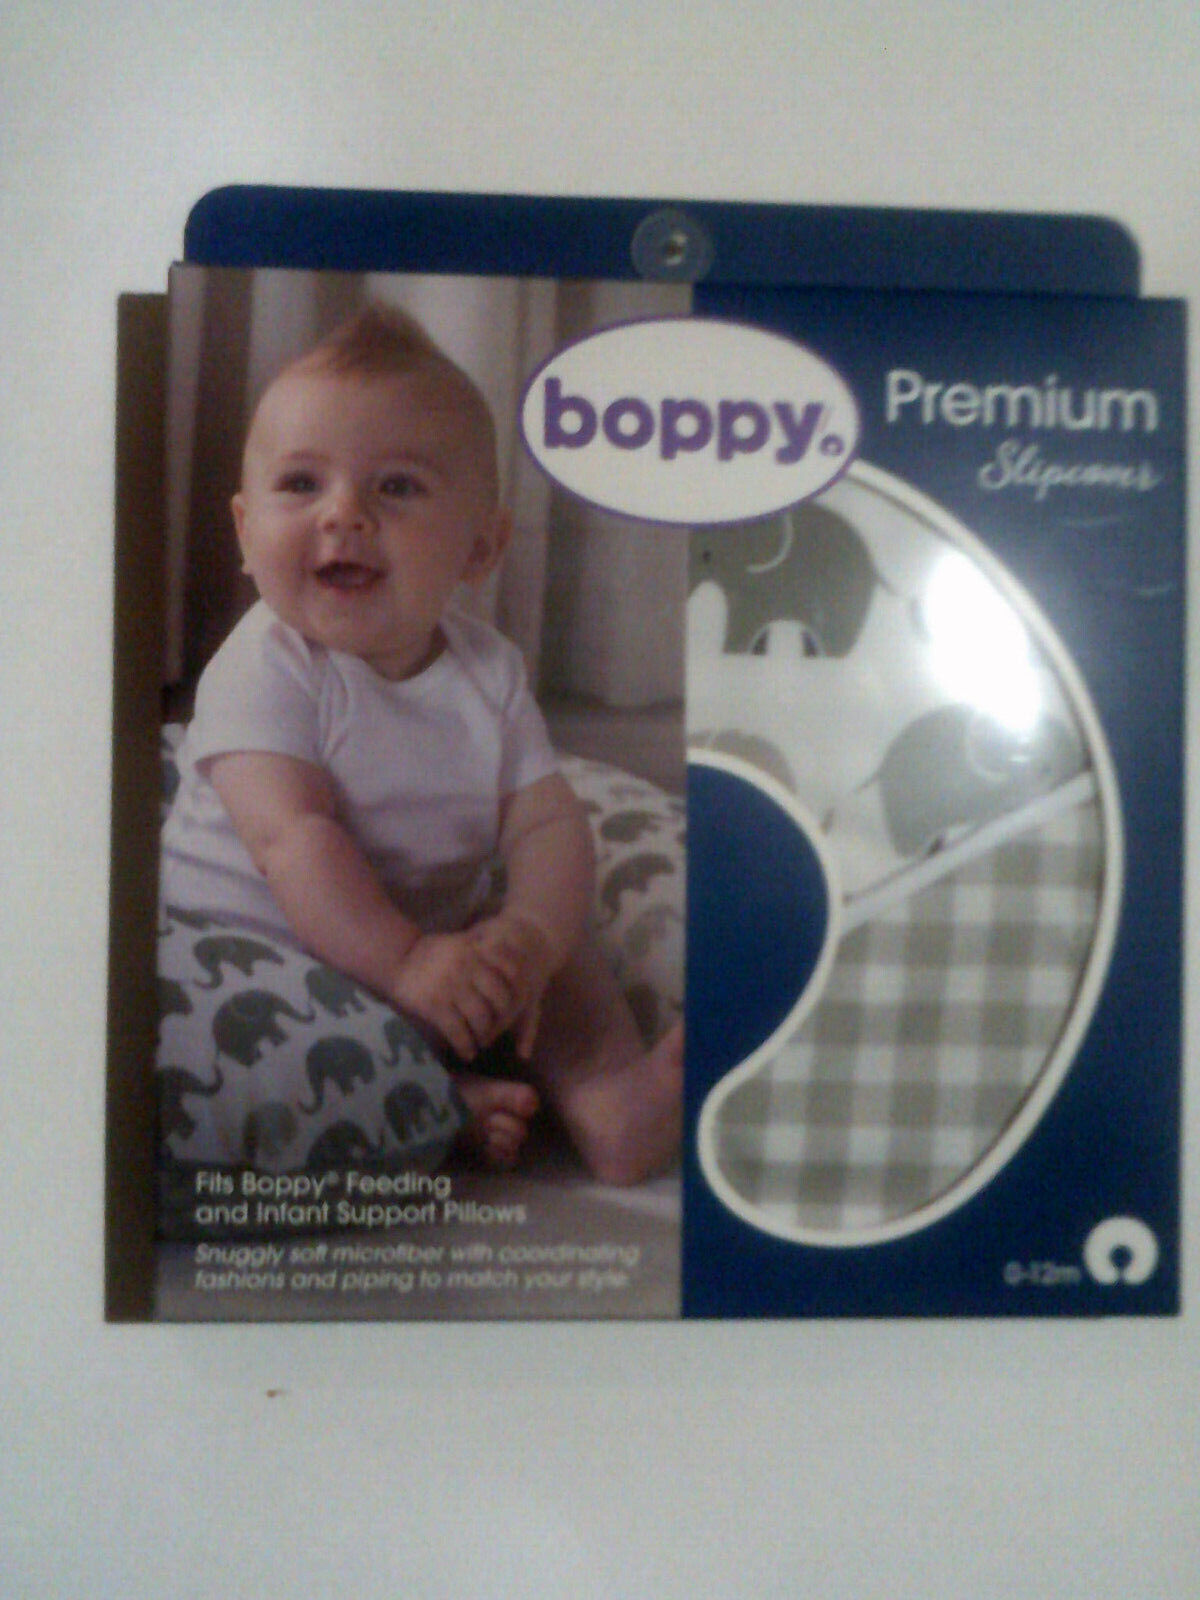 Boppy Premium Slipcover Fits Boppy Feeding & Infant Support Pillows Elephants